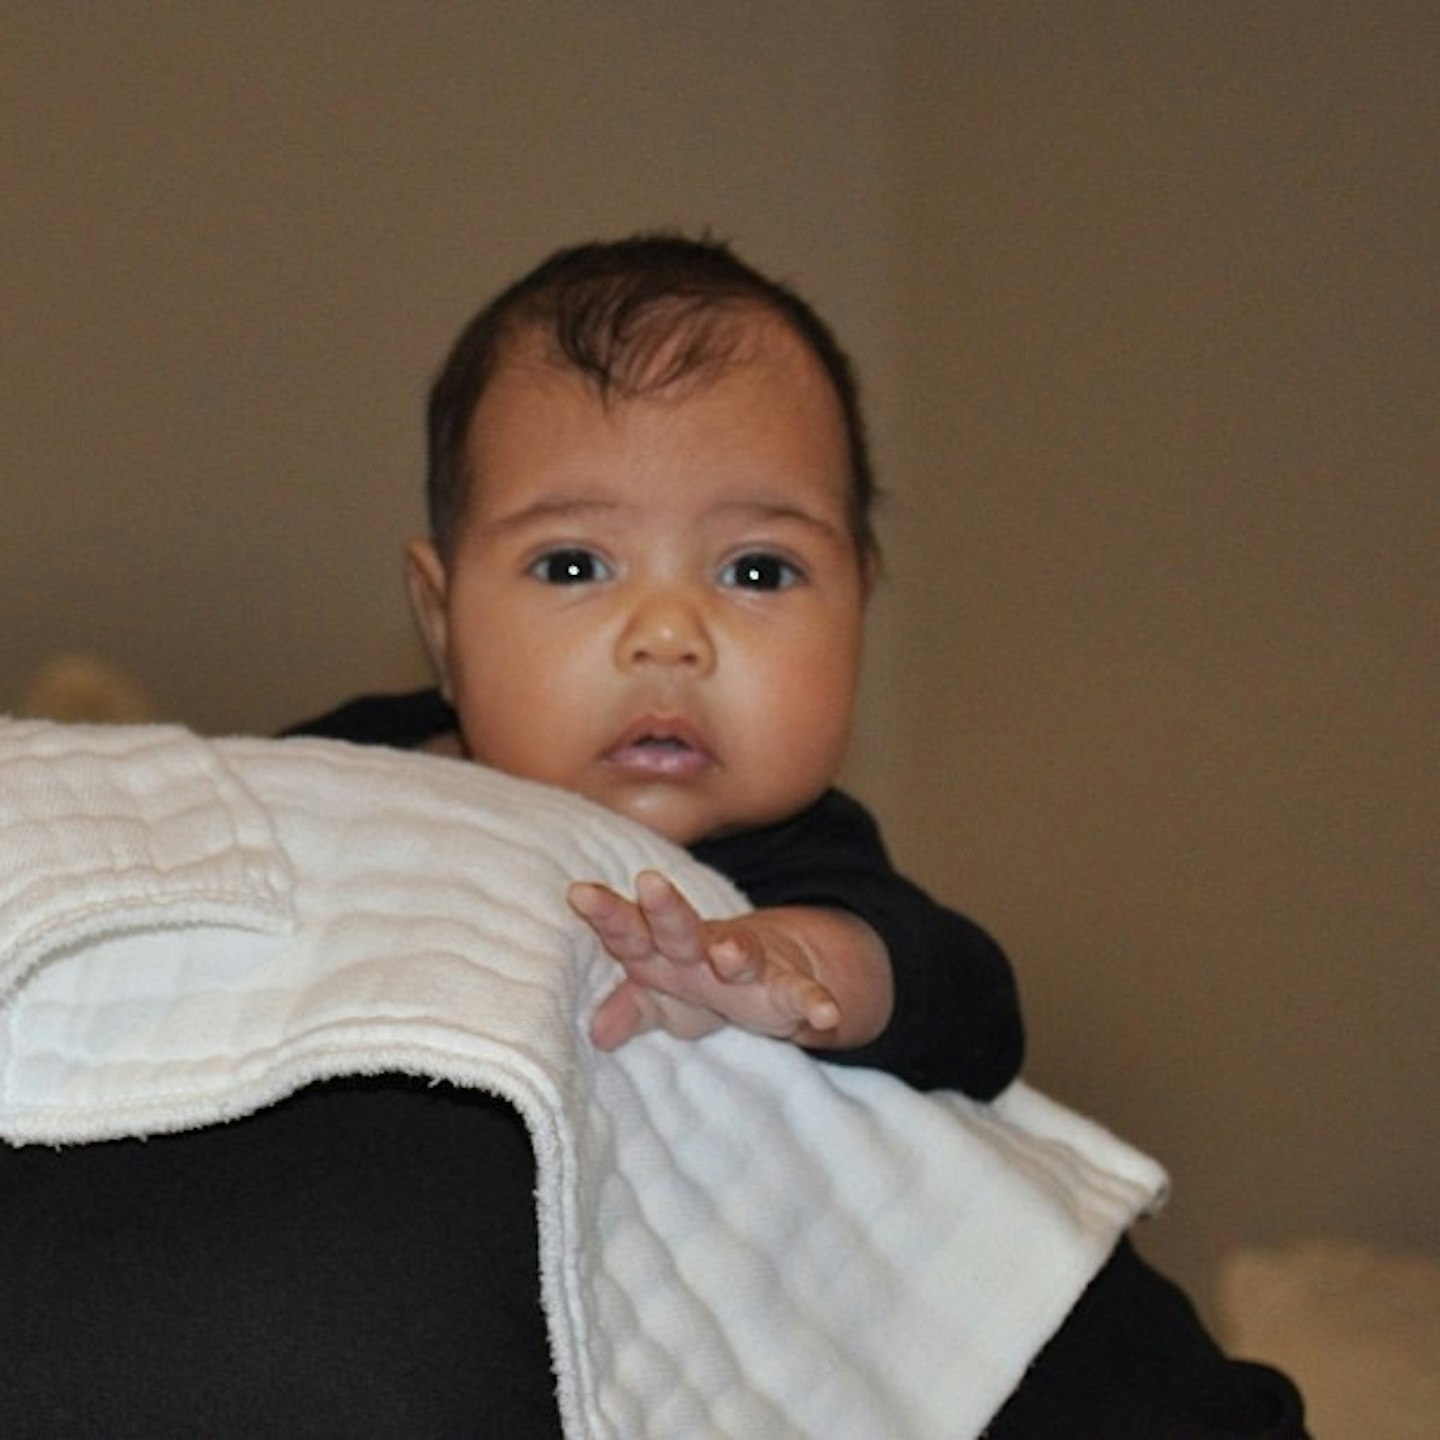 KIm Kardashian's baby, North